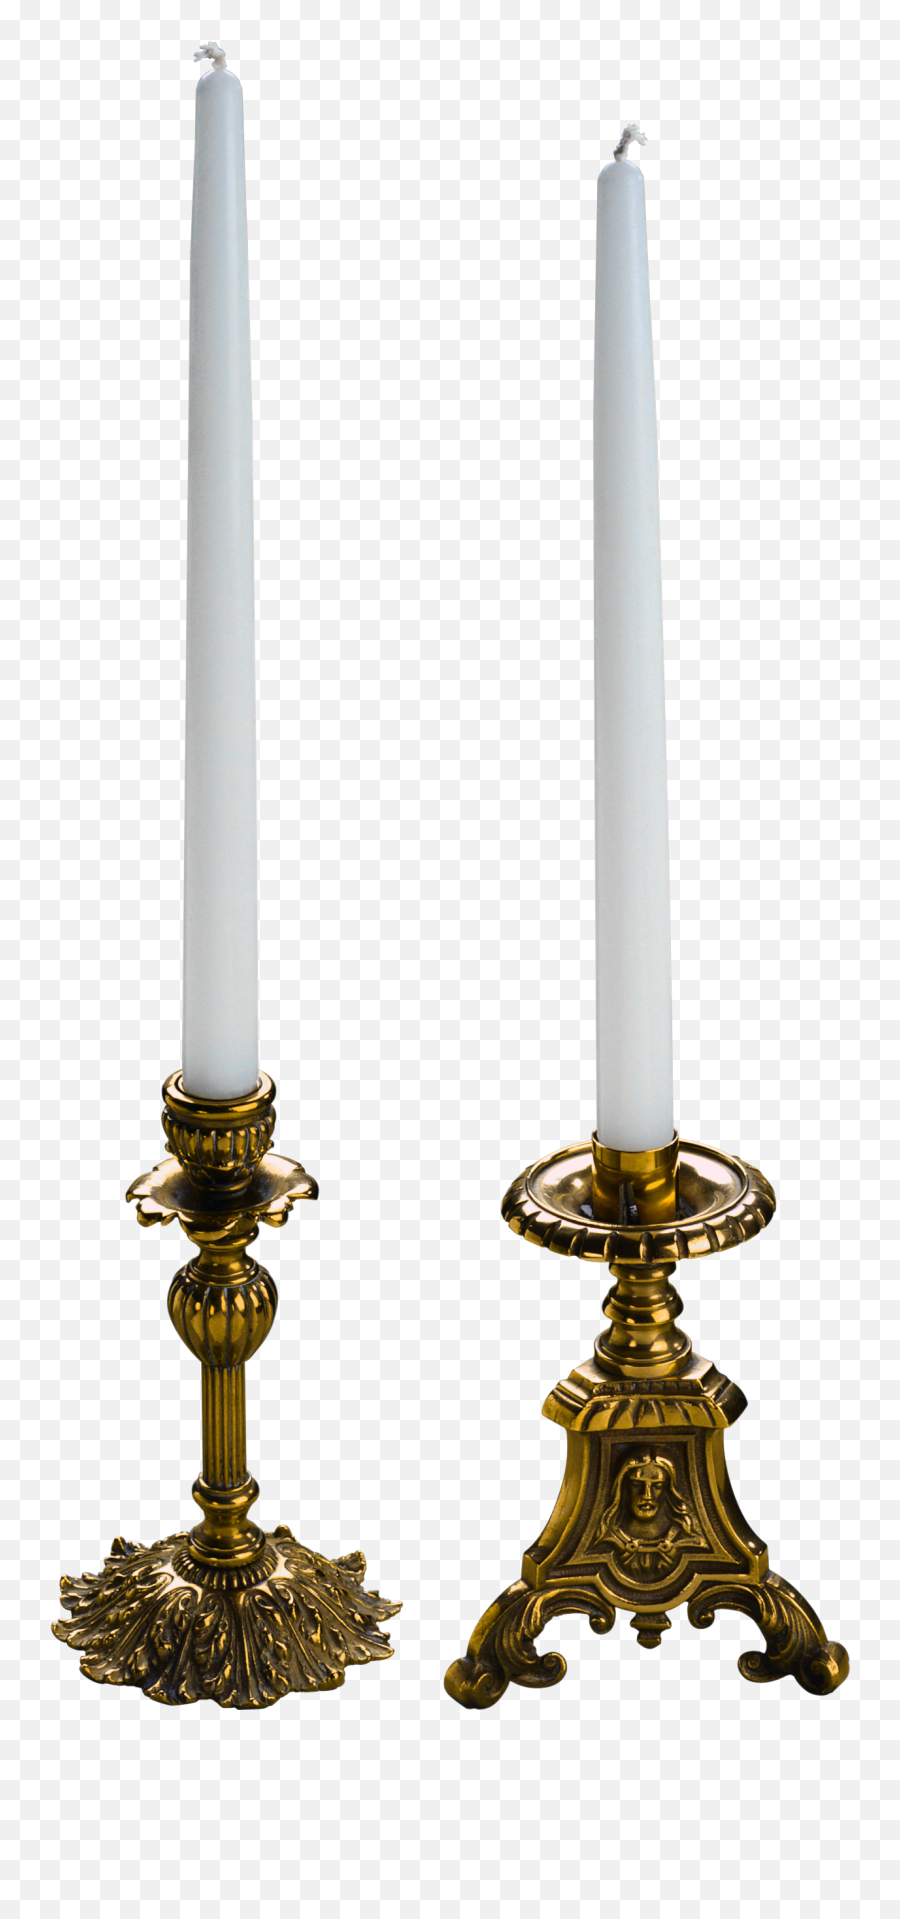 Candle Png Image - Transparent Candle Holder Png,Candles Transparent Background